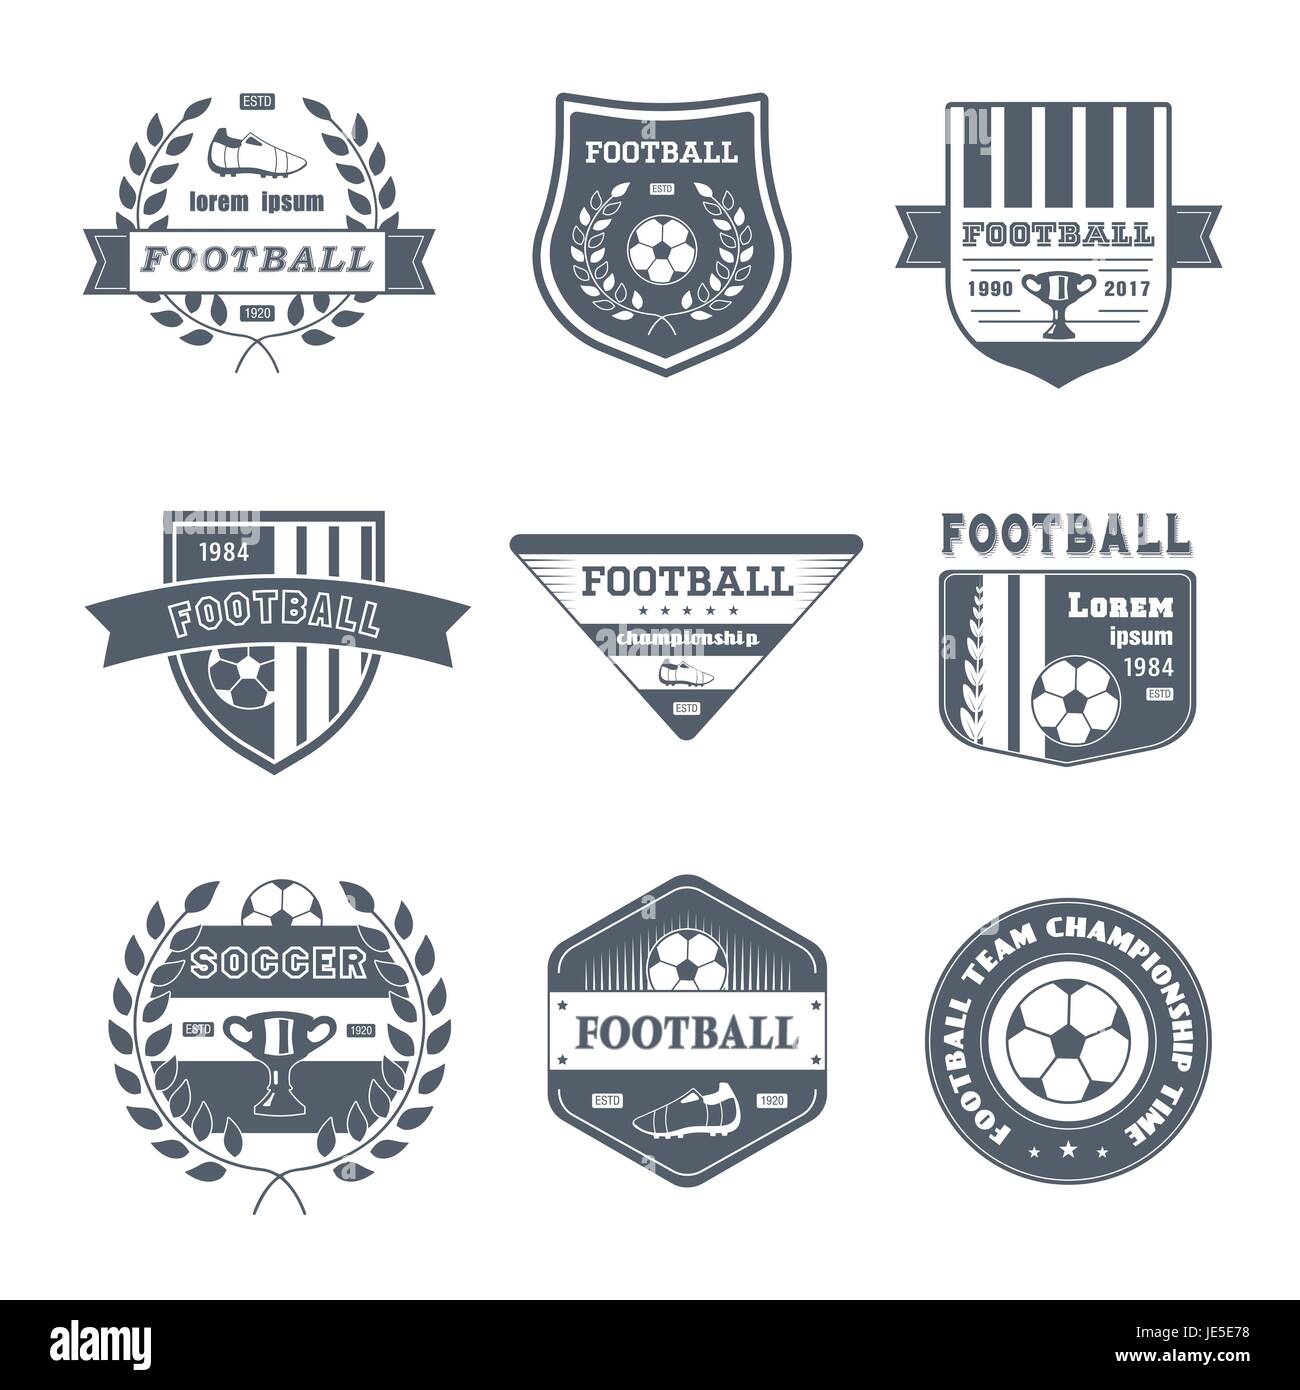 Game of Football - vintage vector set of logos Stock Vector